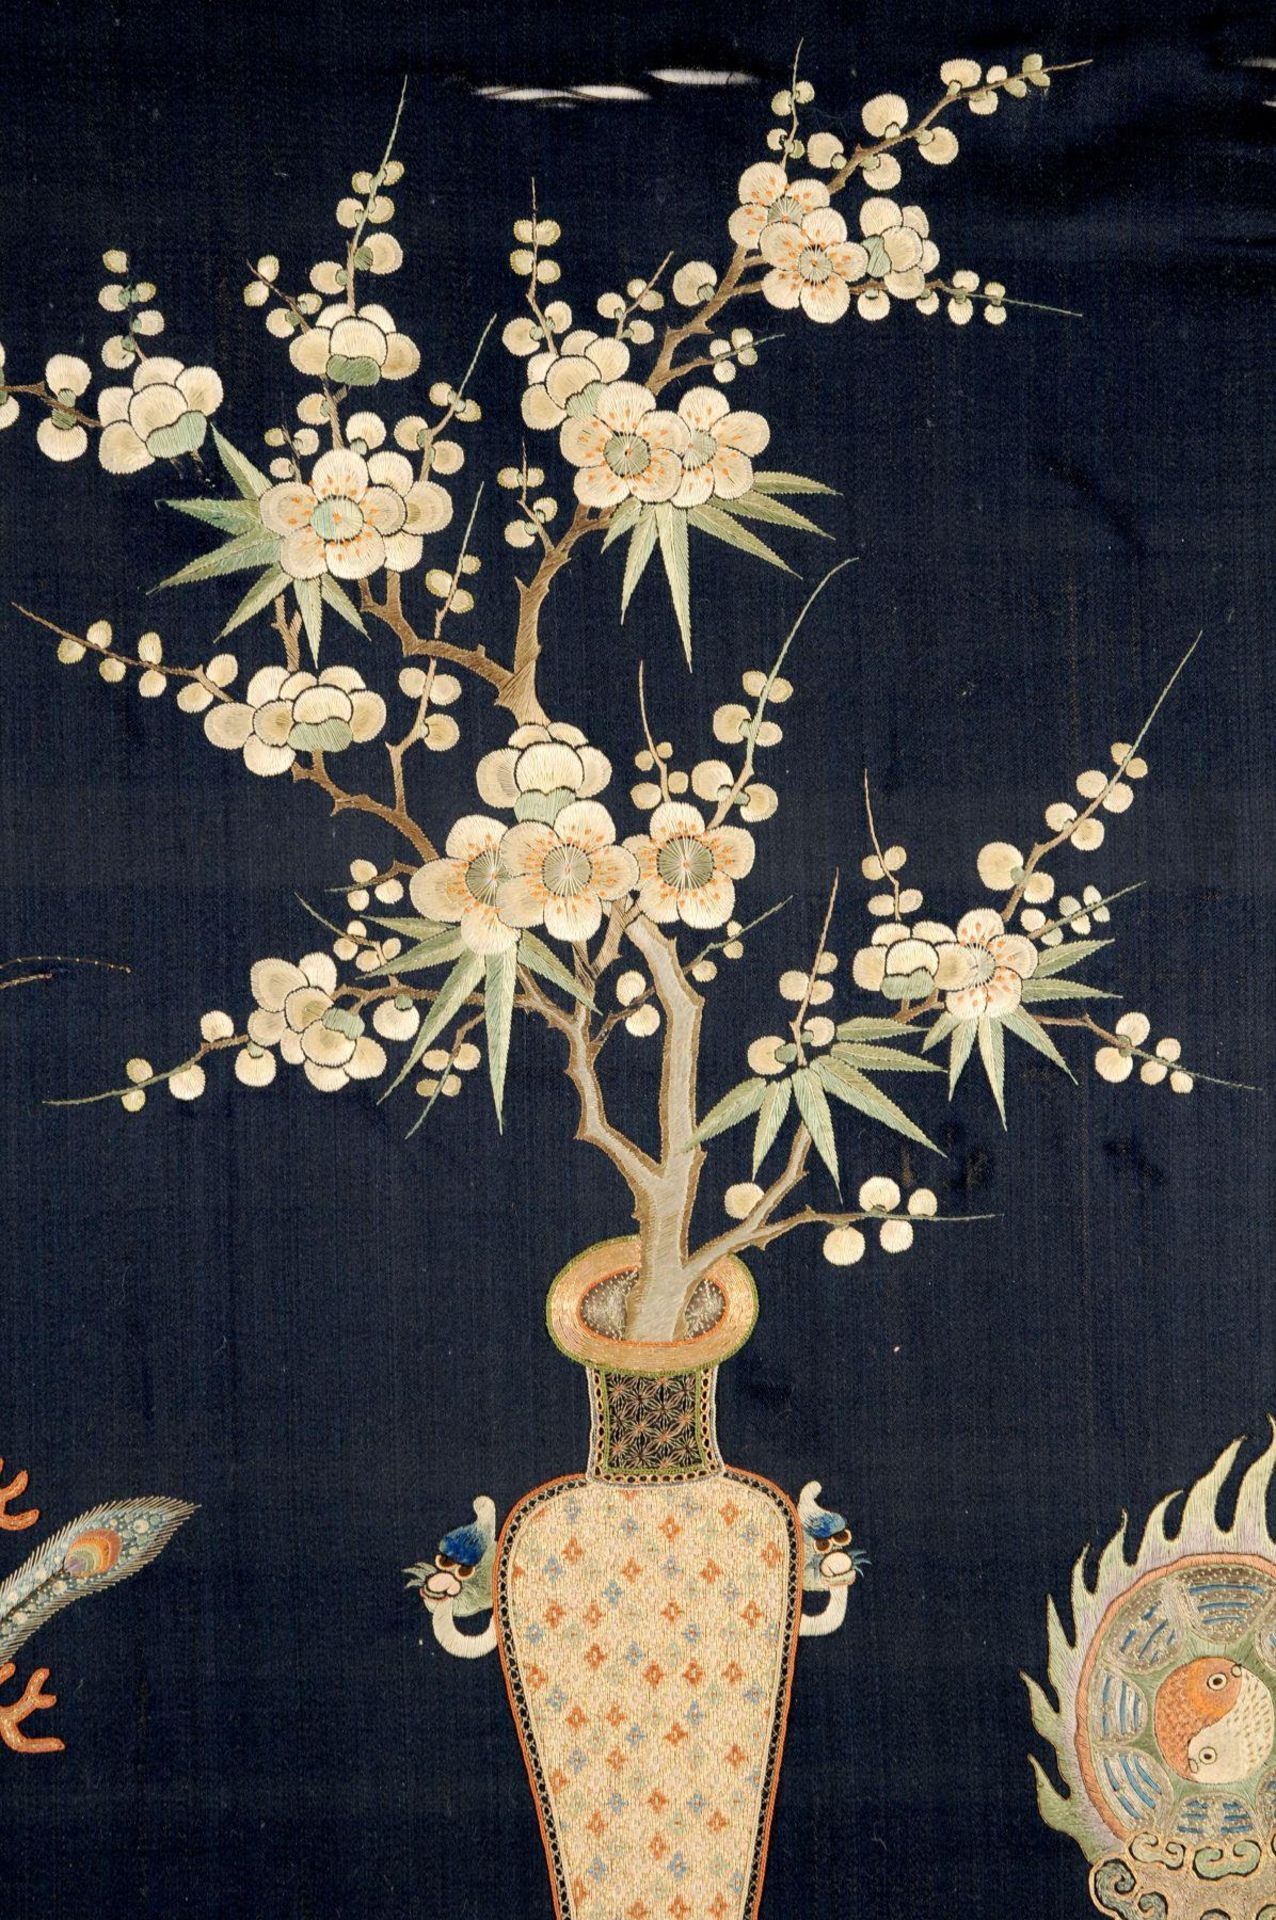 Tischparavent mit Perlmuttinkrustationen. China. Späte Qing-Dynasty, Mitte 19. Jh. - Image 5 of 7